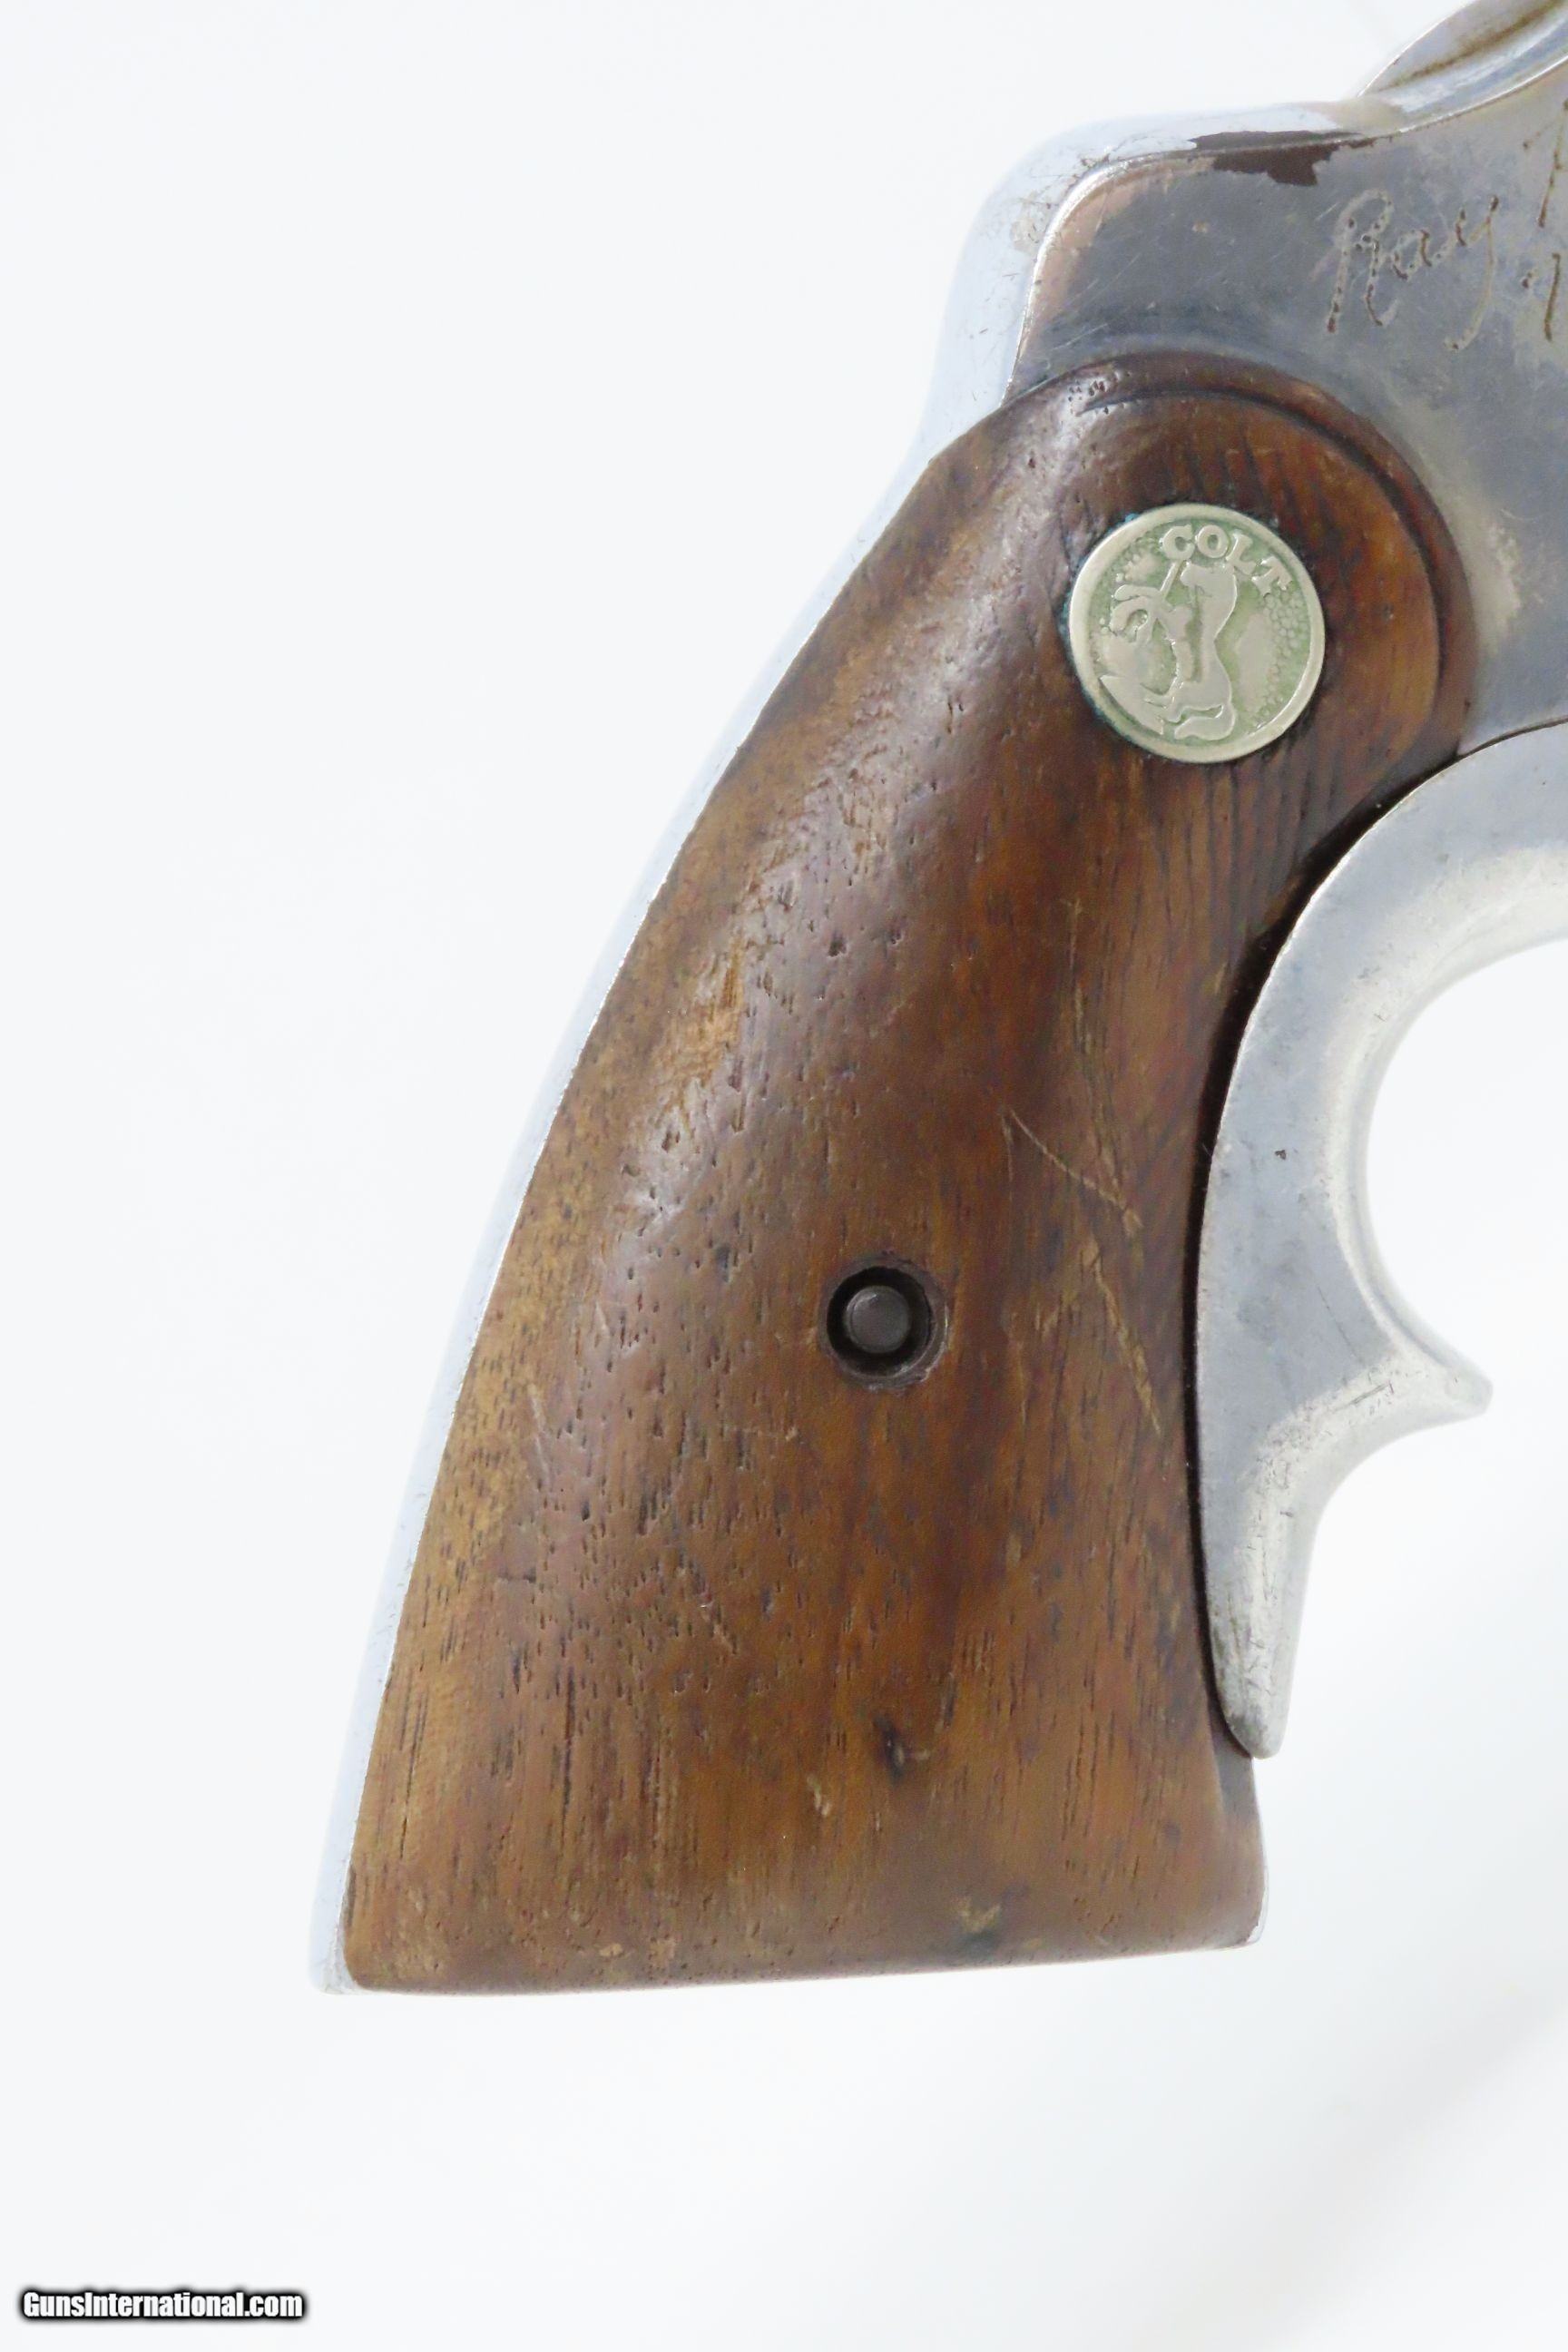 C1942 Mfr World War Ii Colt “commando” 38 Special Revolver Candr Oss Navy Wartime Variant Of The 